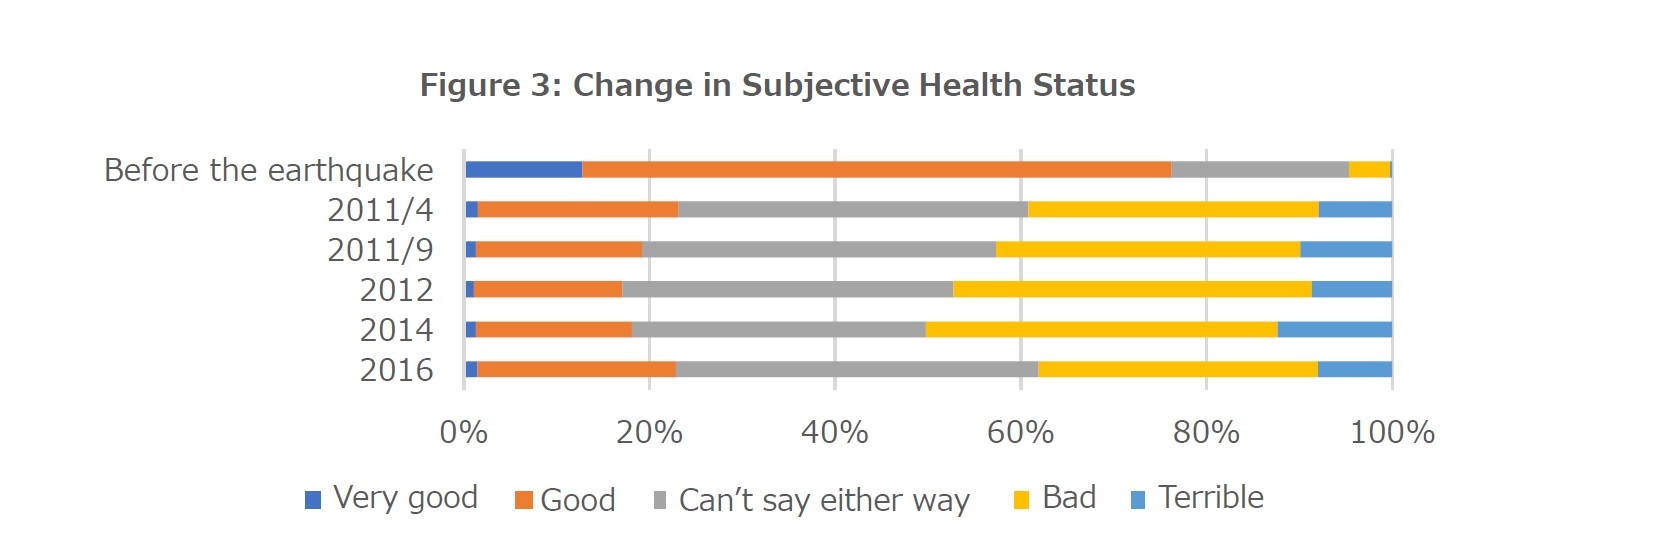 Figure 3: Change in Subjective Health Status